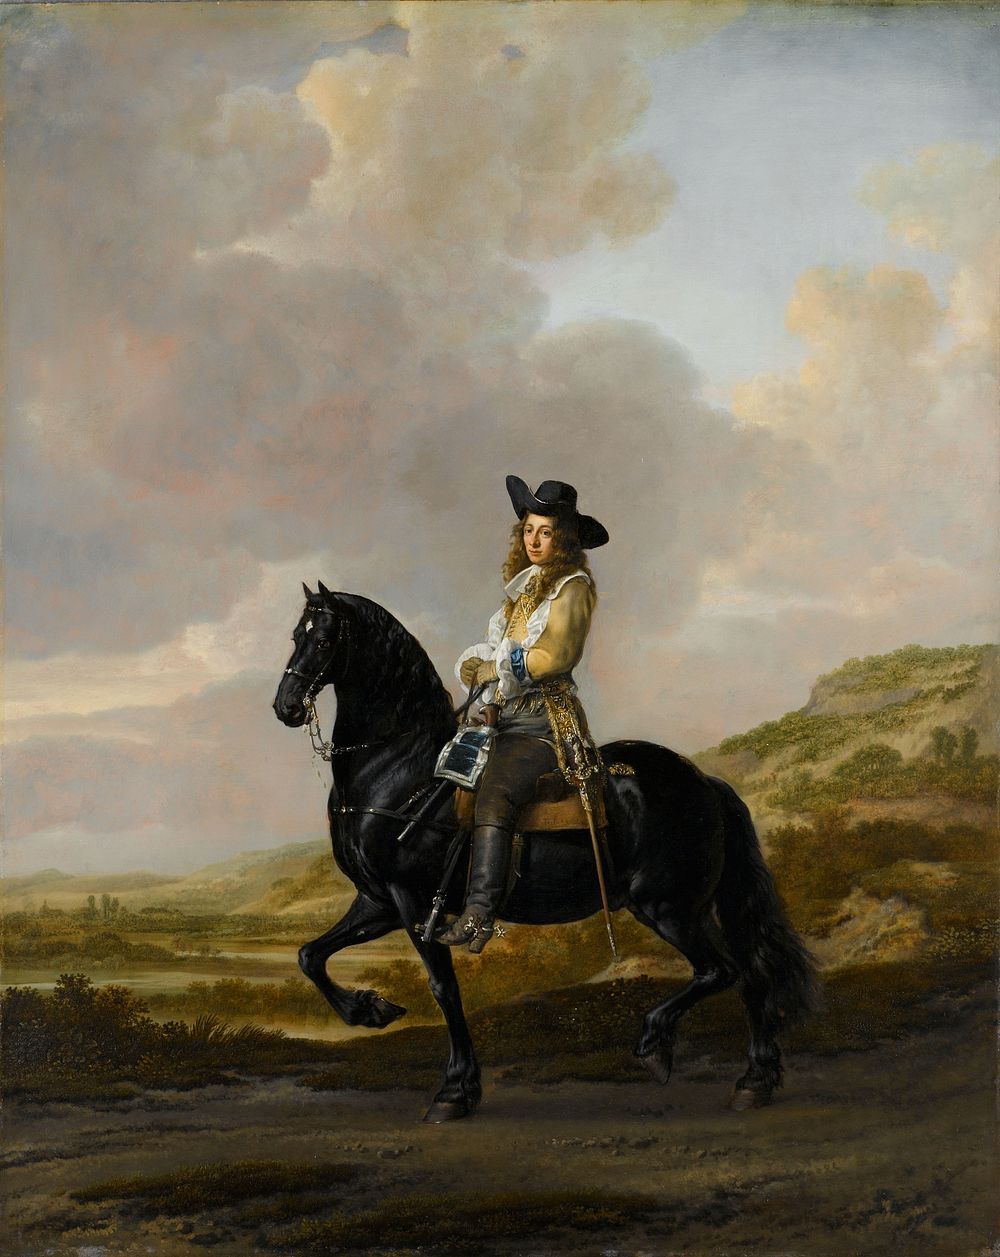 Pieter Schout on Horseback (1660) by Thomas de Keyser